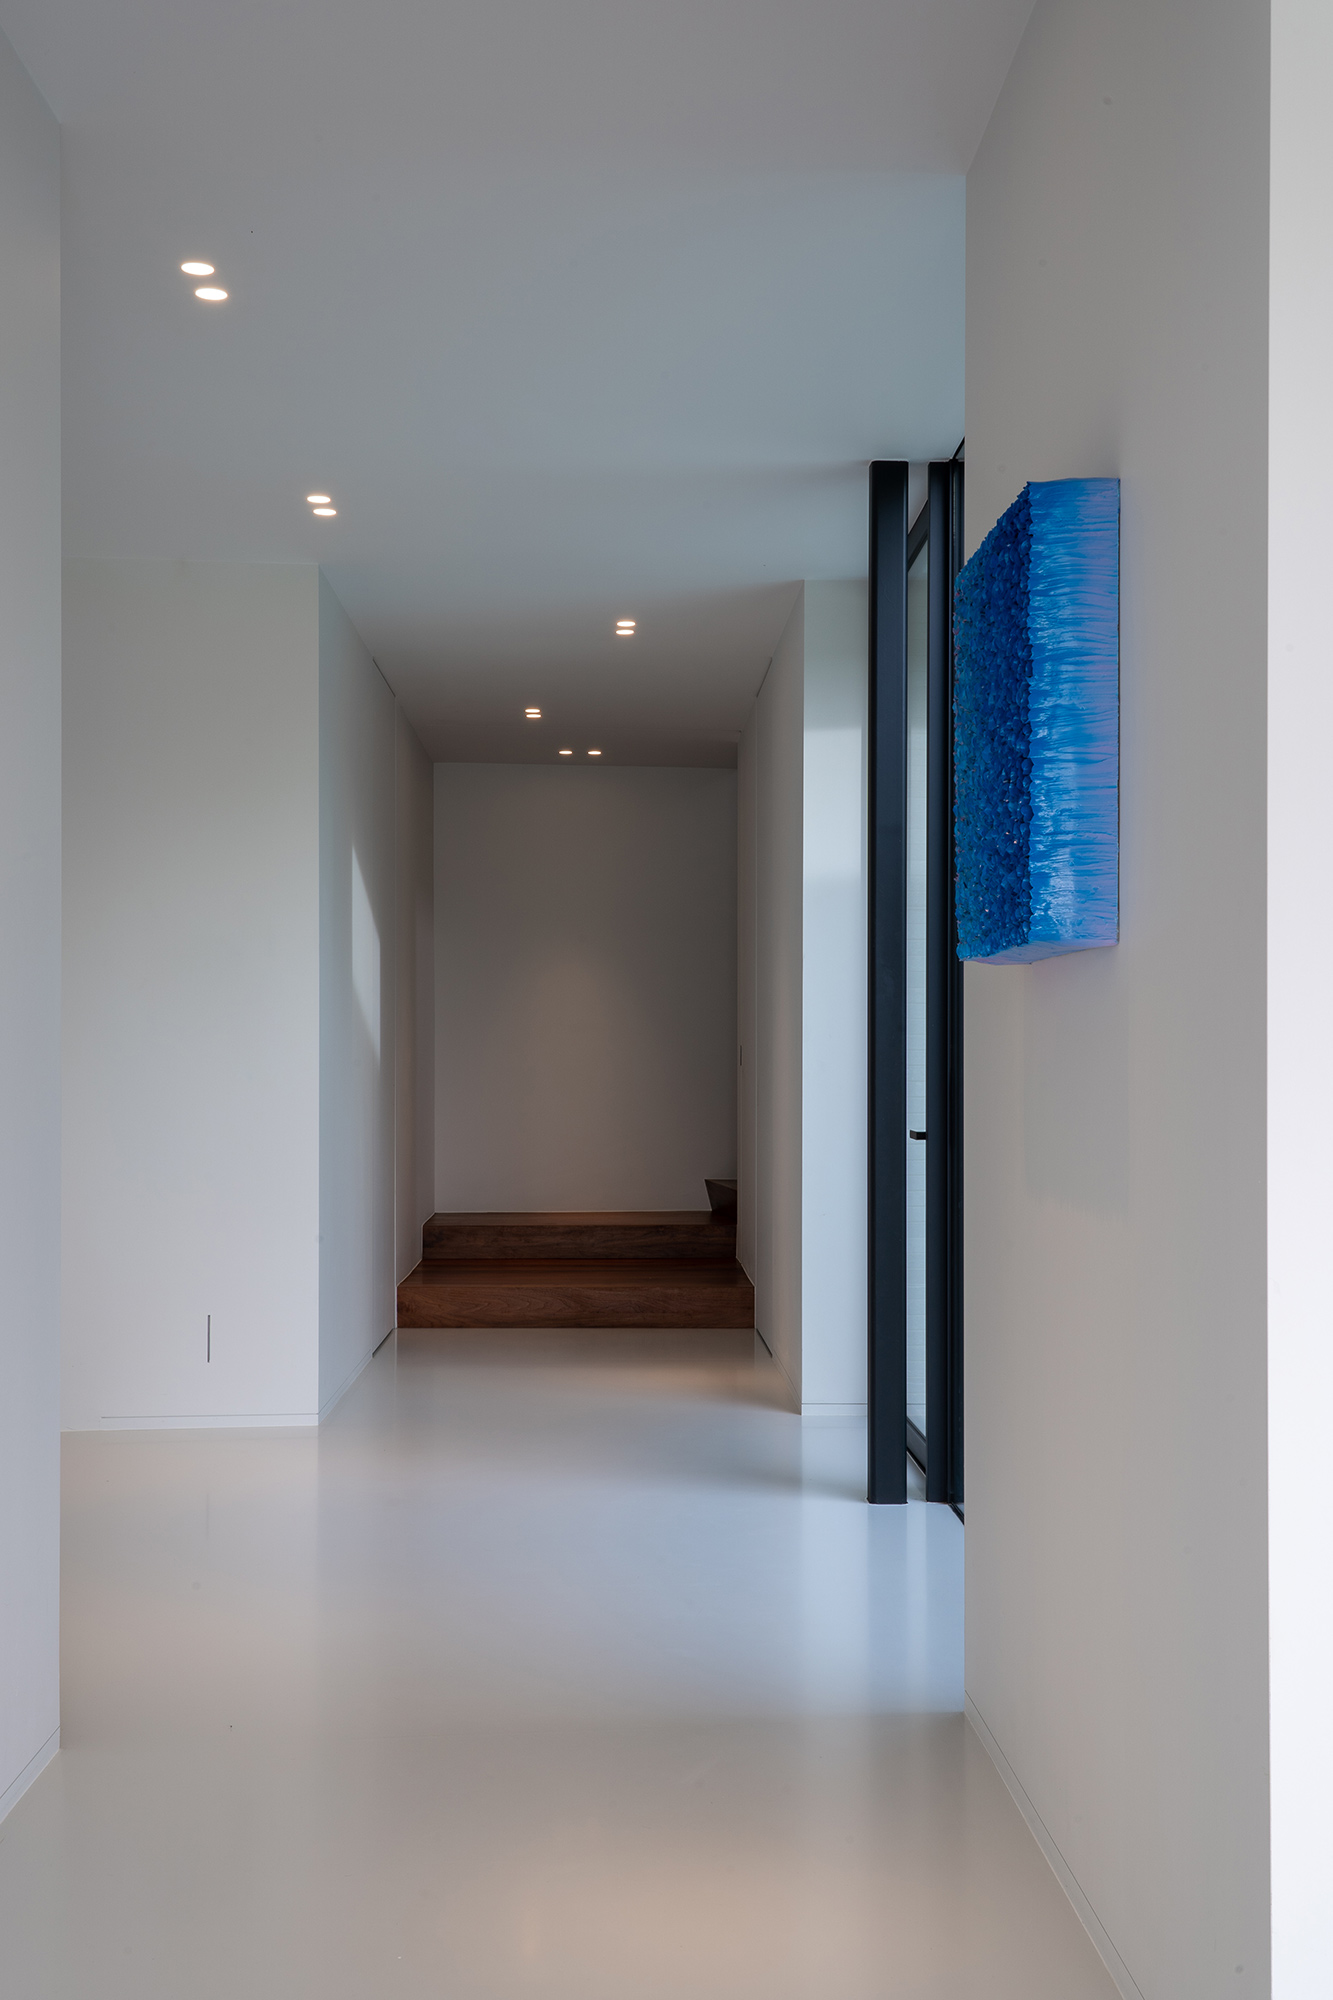 Image of Bruinborrelaan 4 in The floor in the spotlight: how eye-catching design enhances minimalist architecture - Cosentino